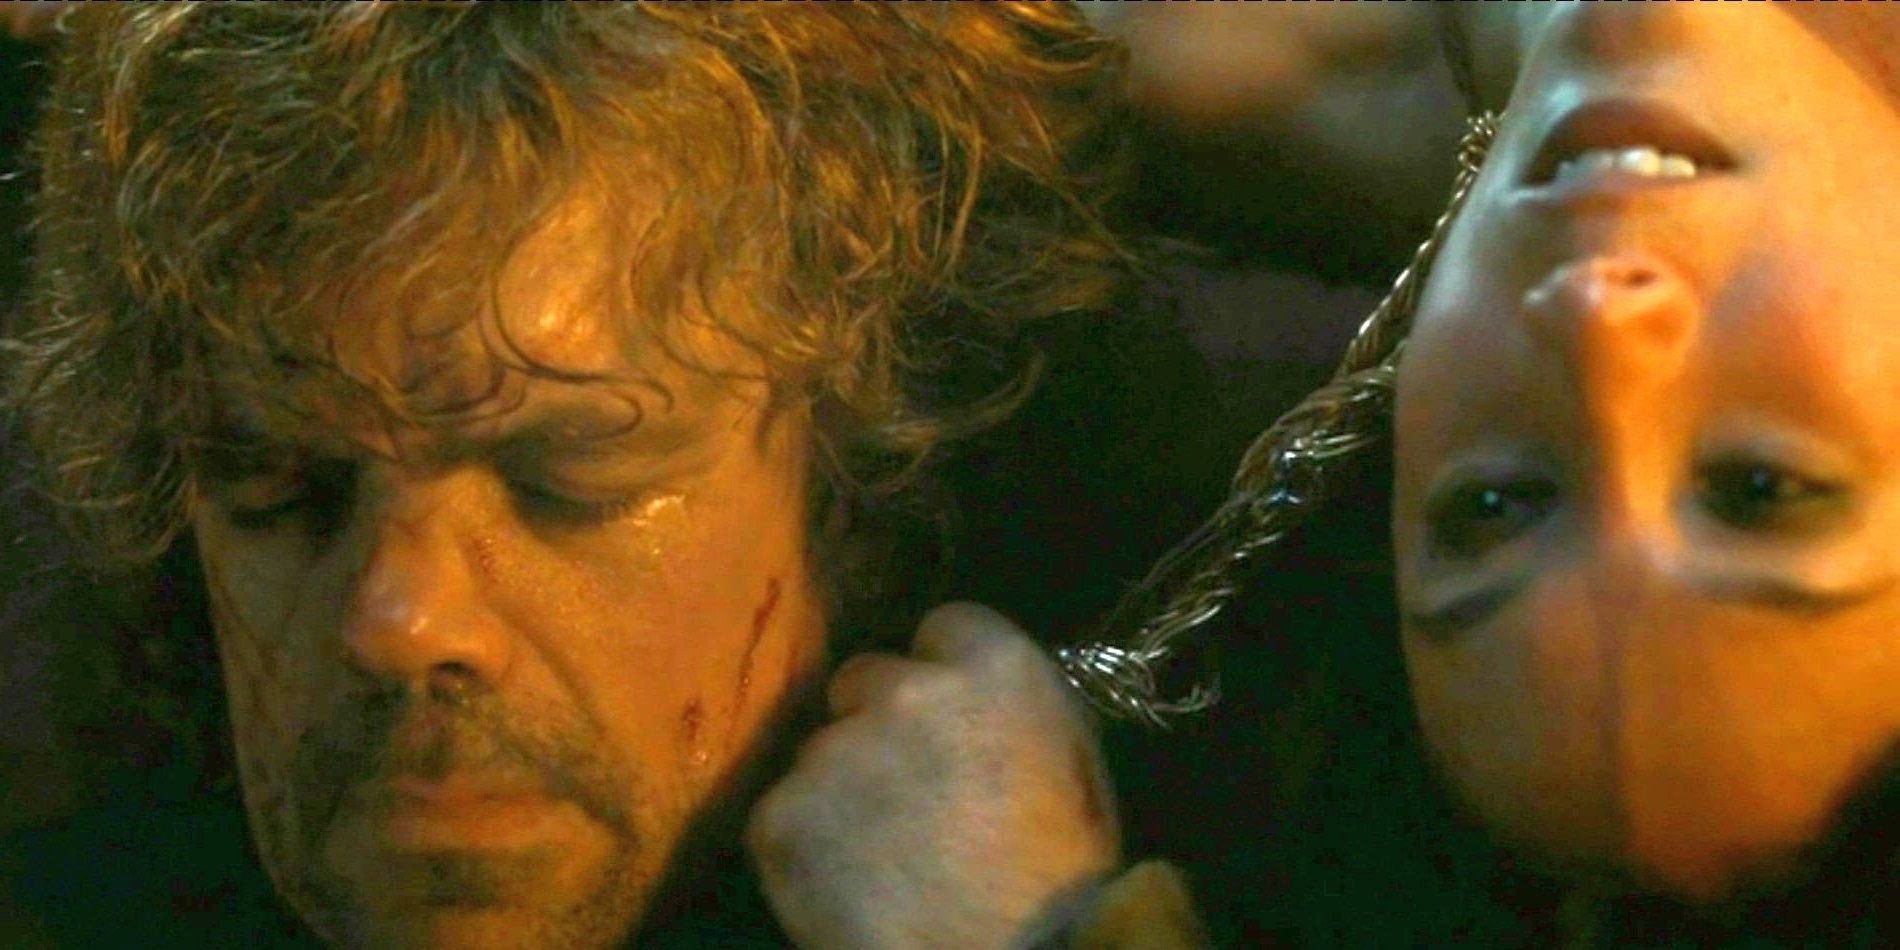 Tyrion Lannister kills Shae